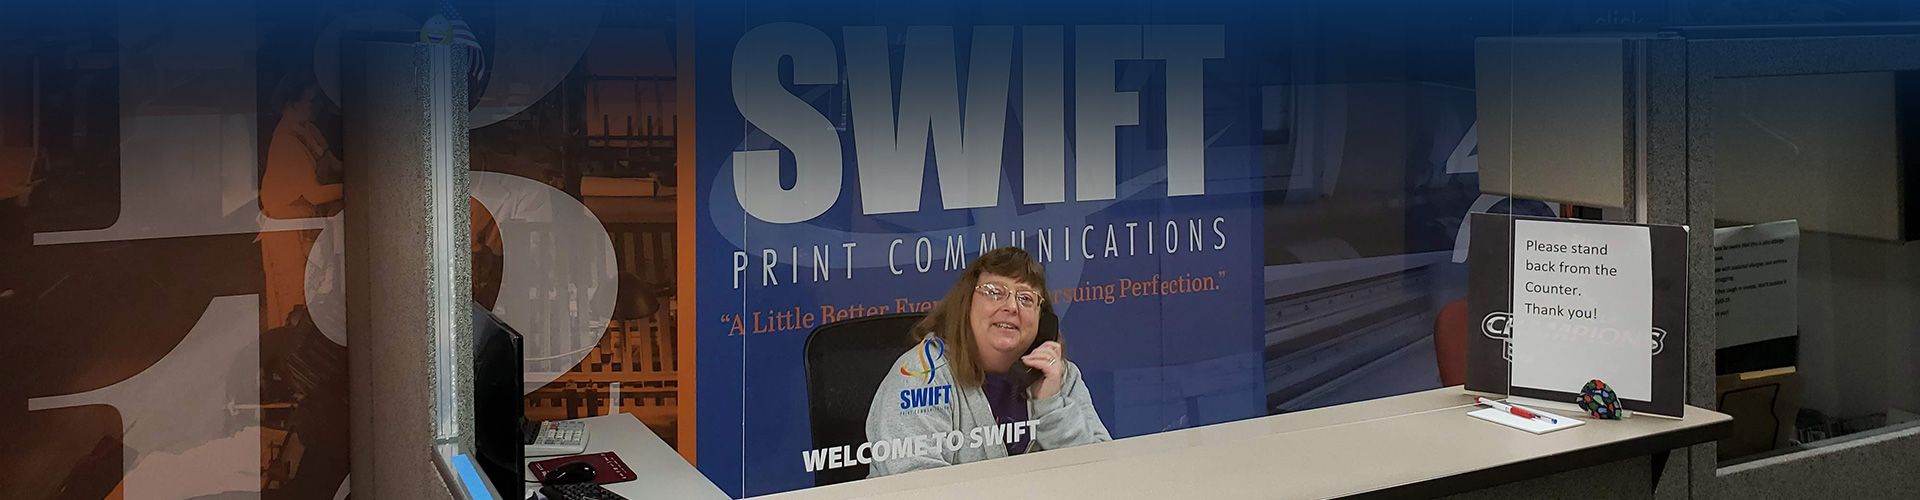 swift print communications reception